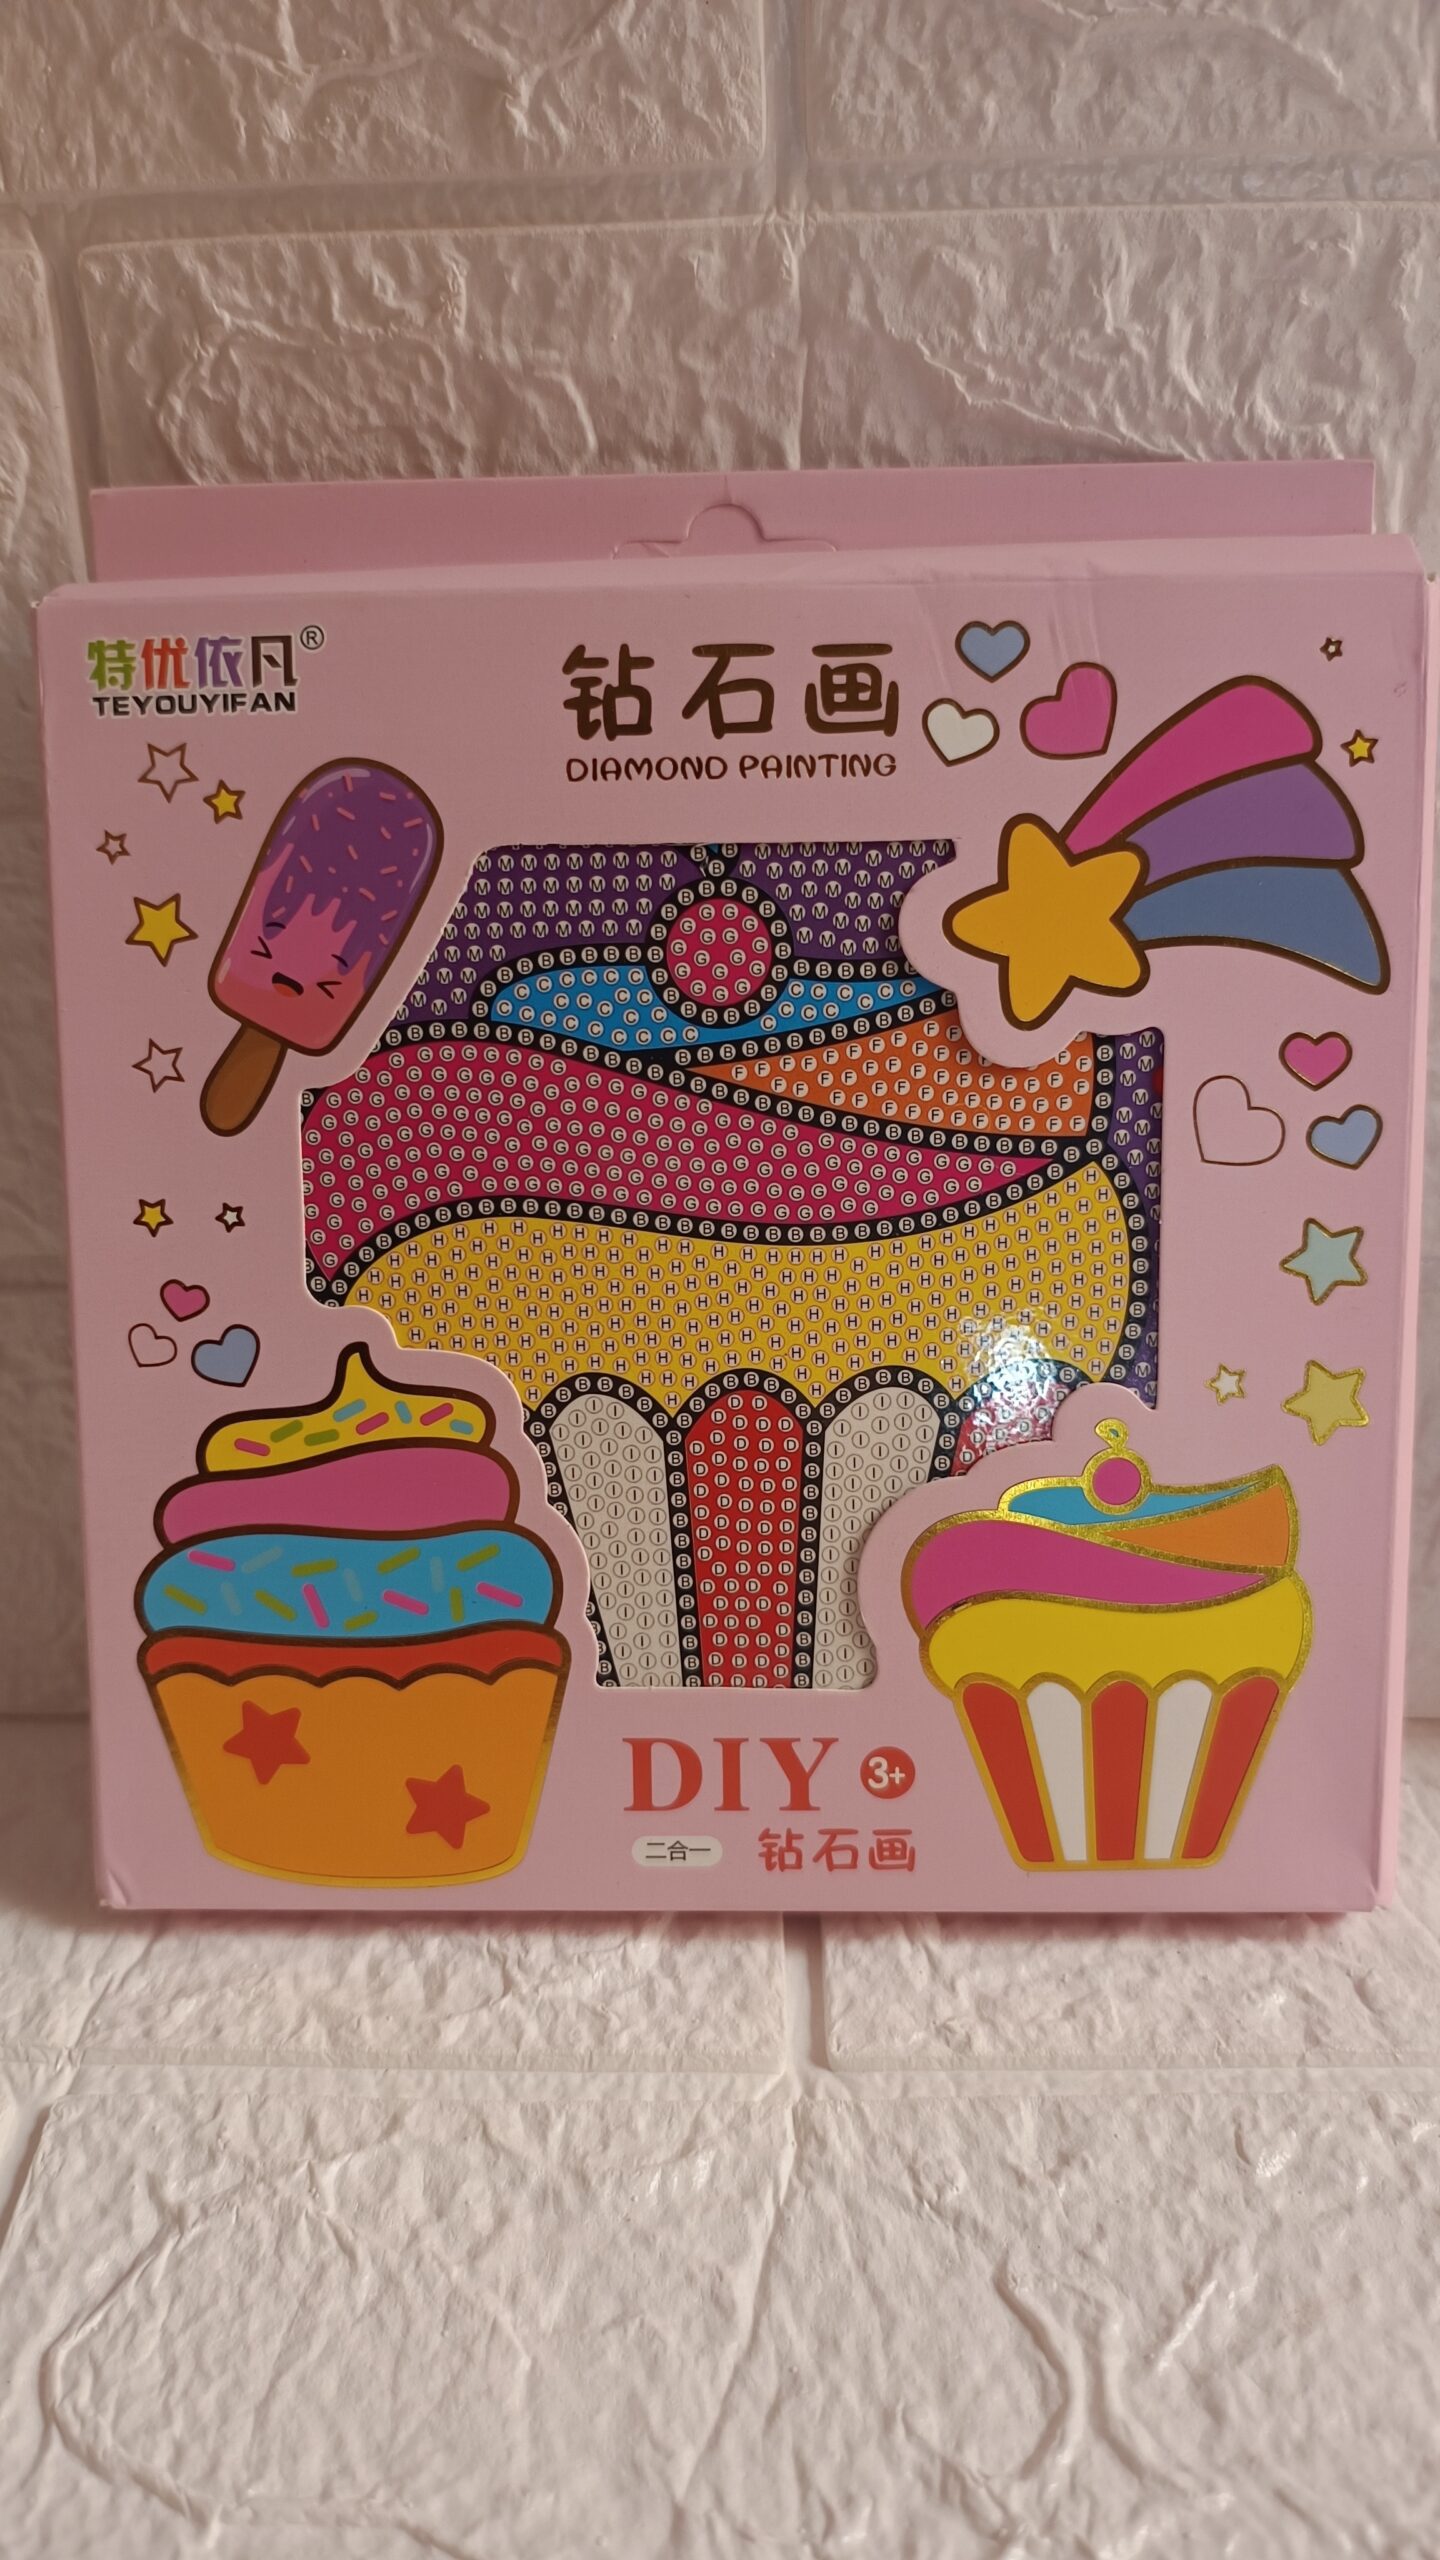 16 Pcs Cupcake Diamond Painting Magnets DIY Diamond Painting Kits for Kids